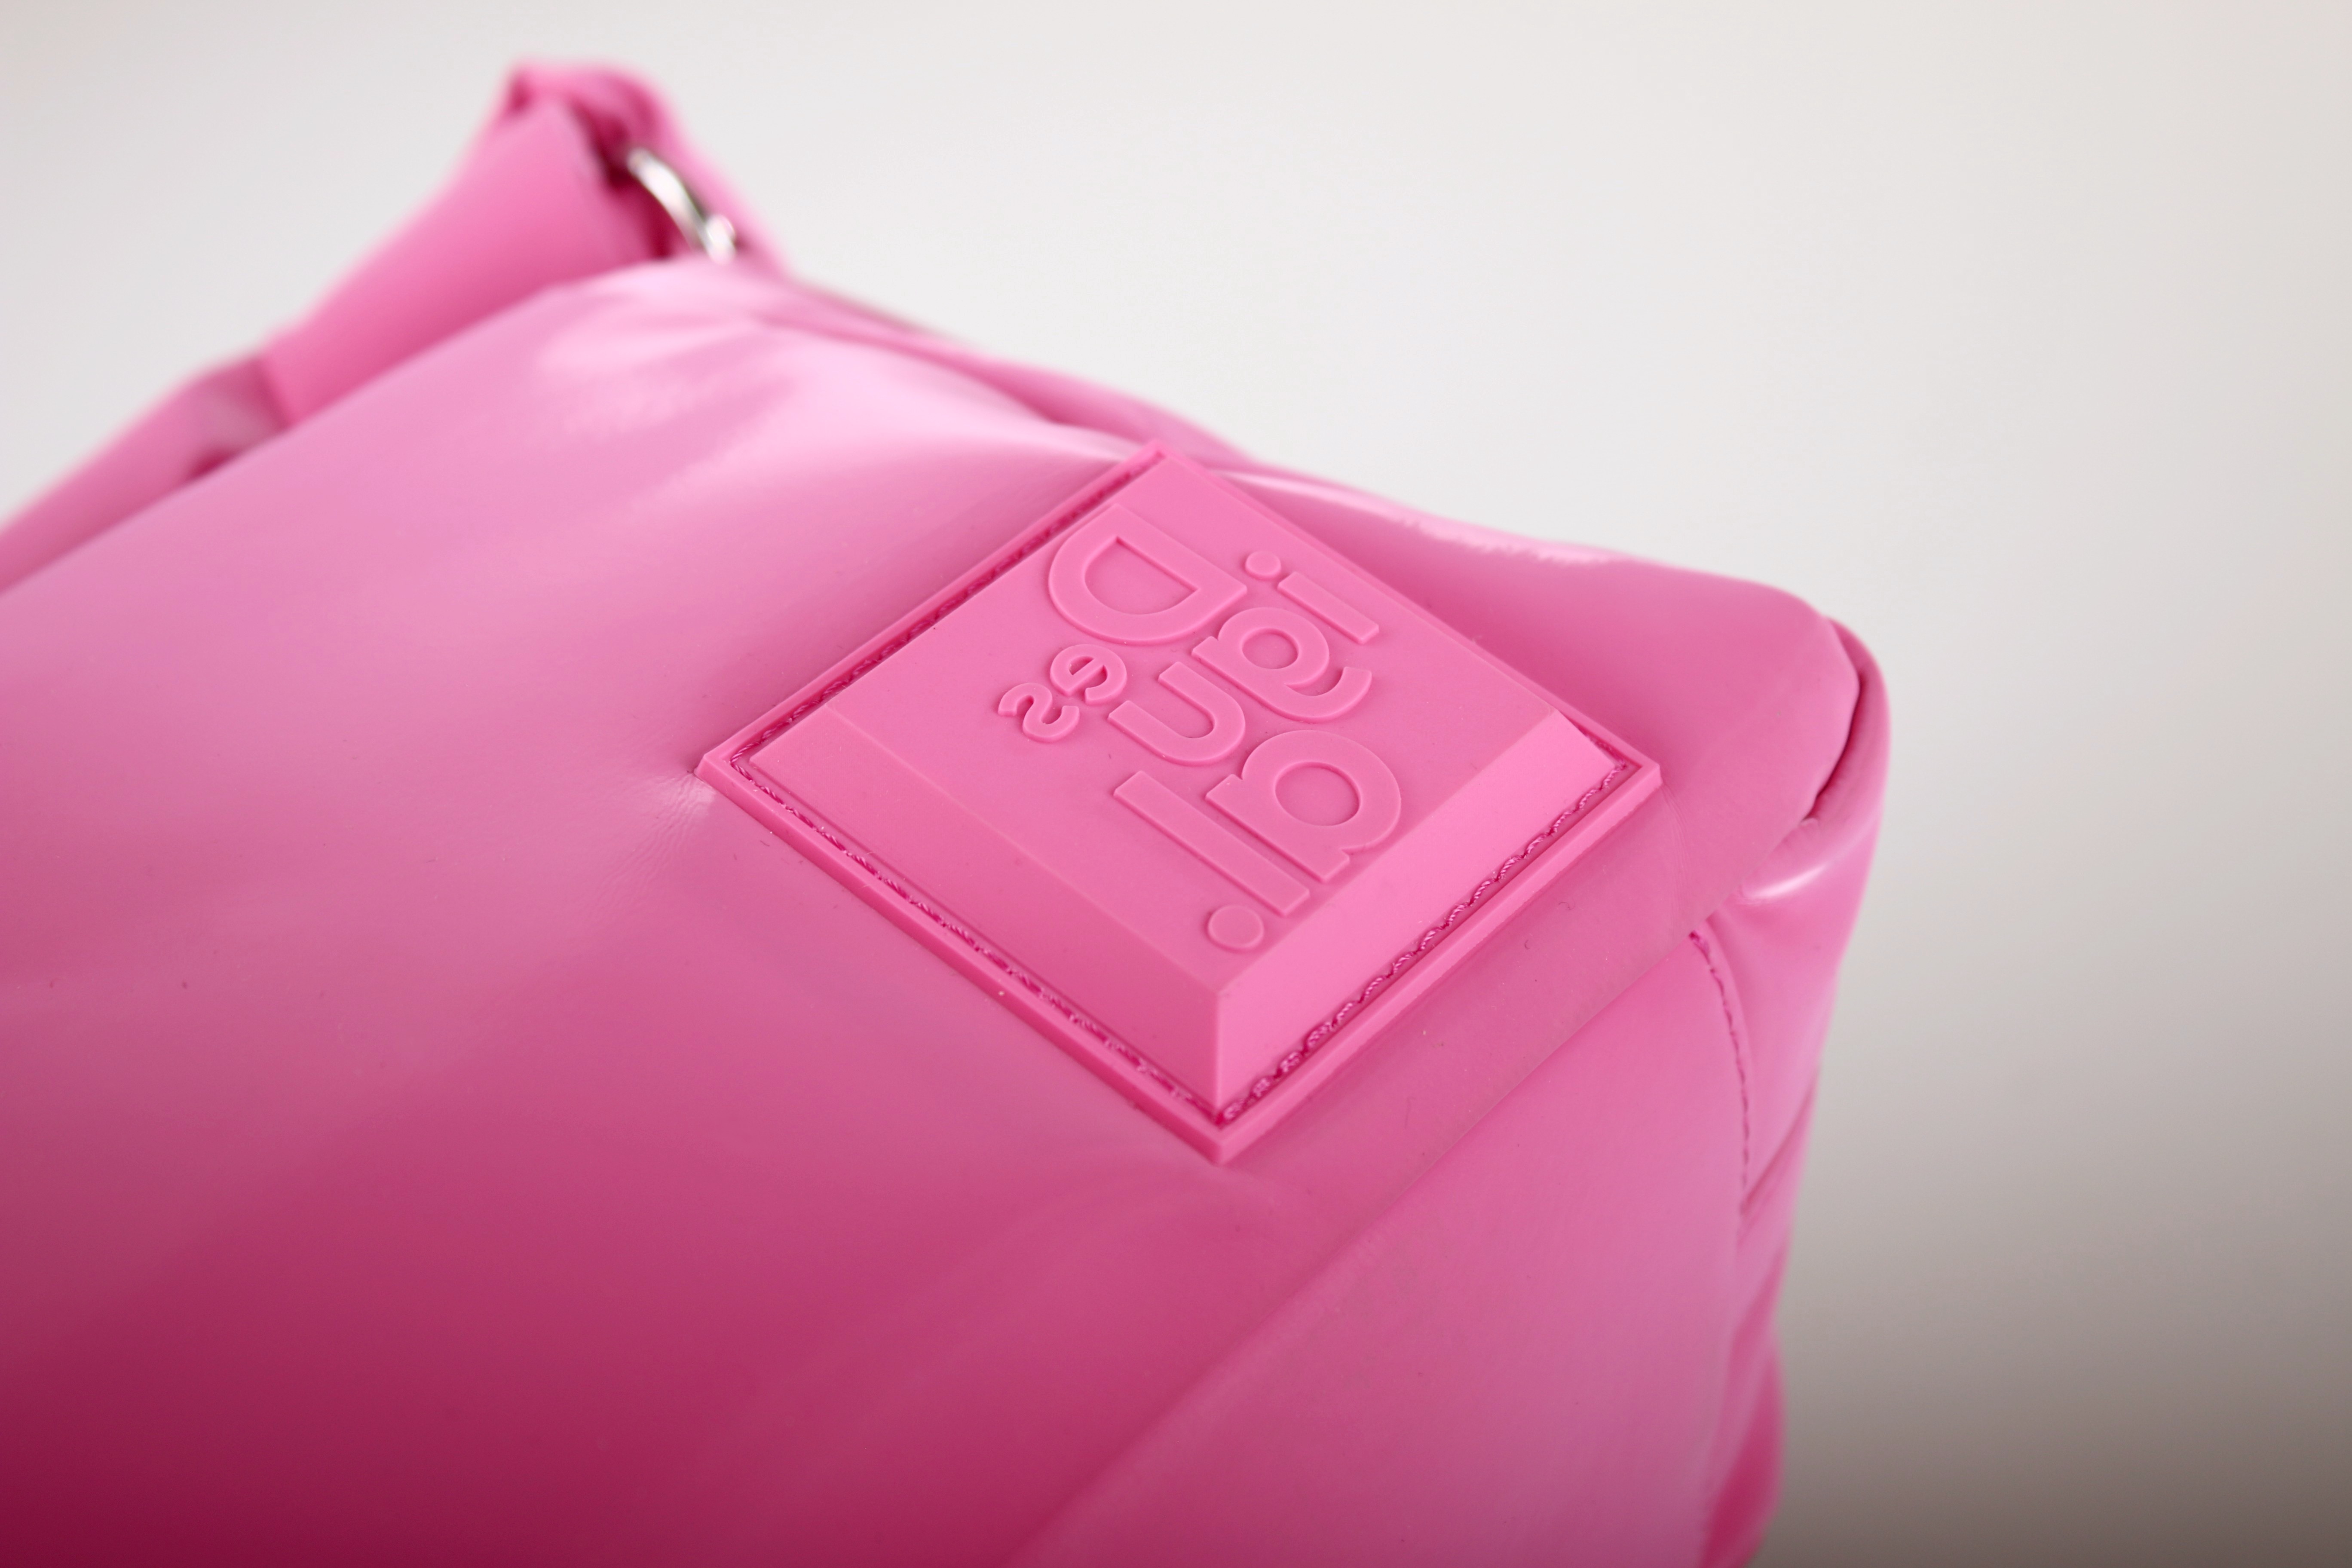 Desigual Slouch Bag pink